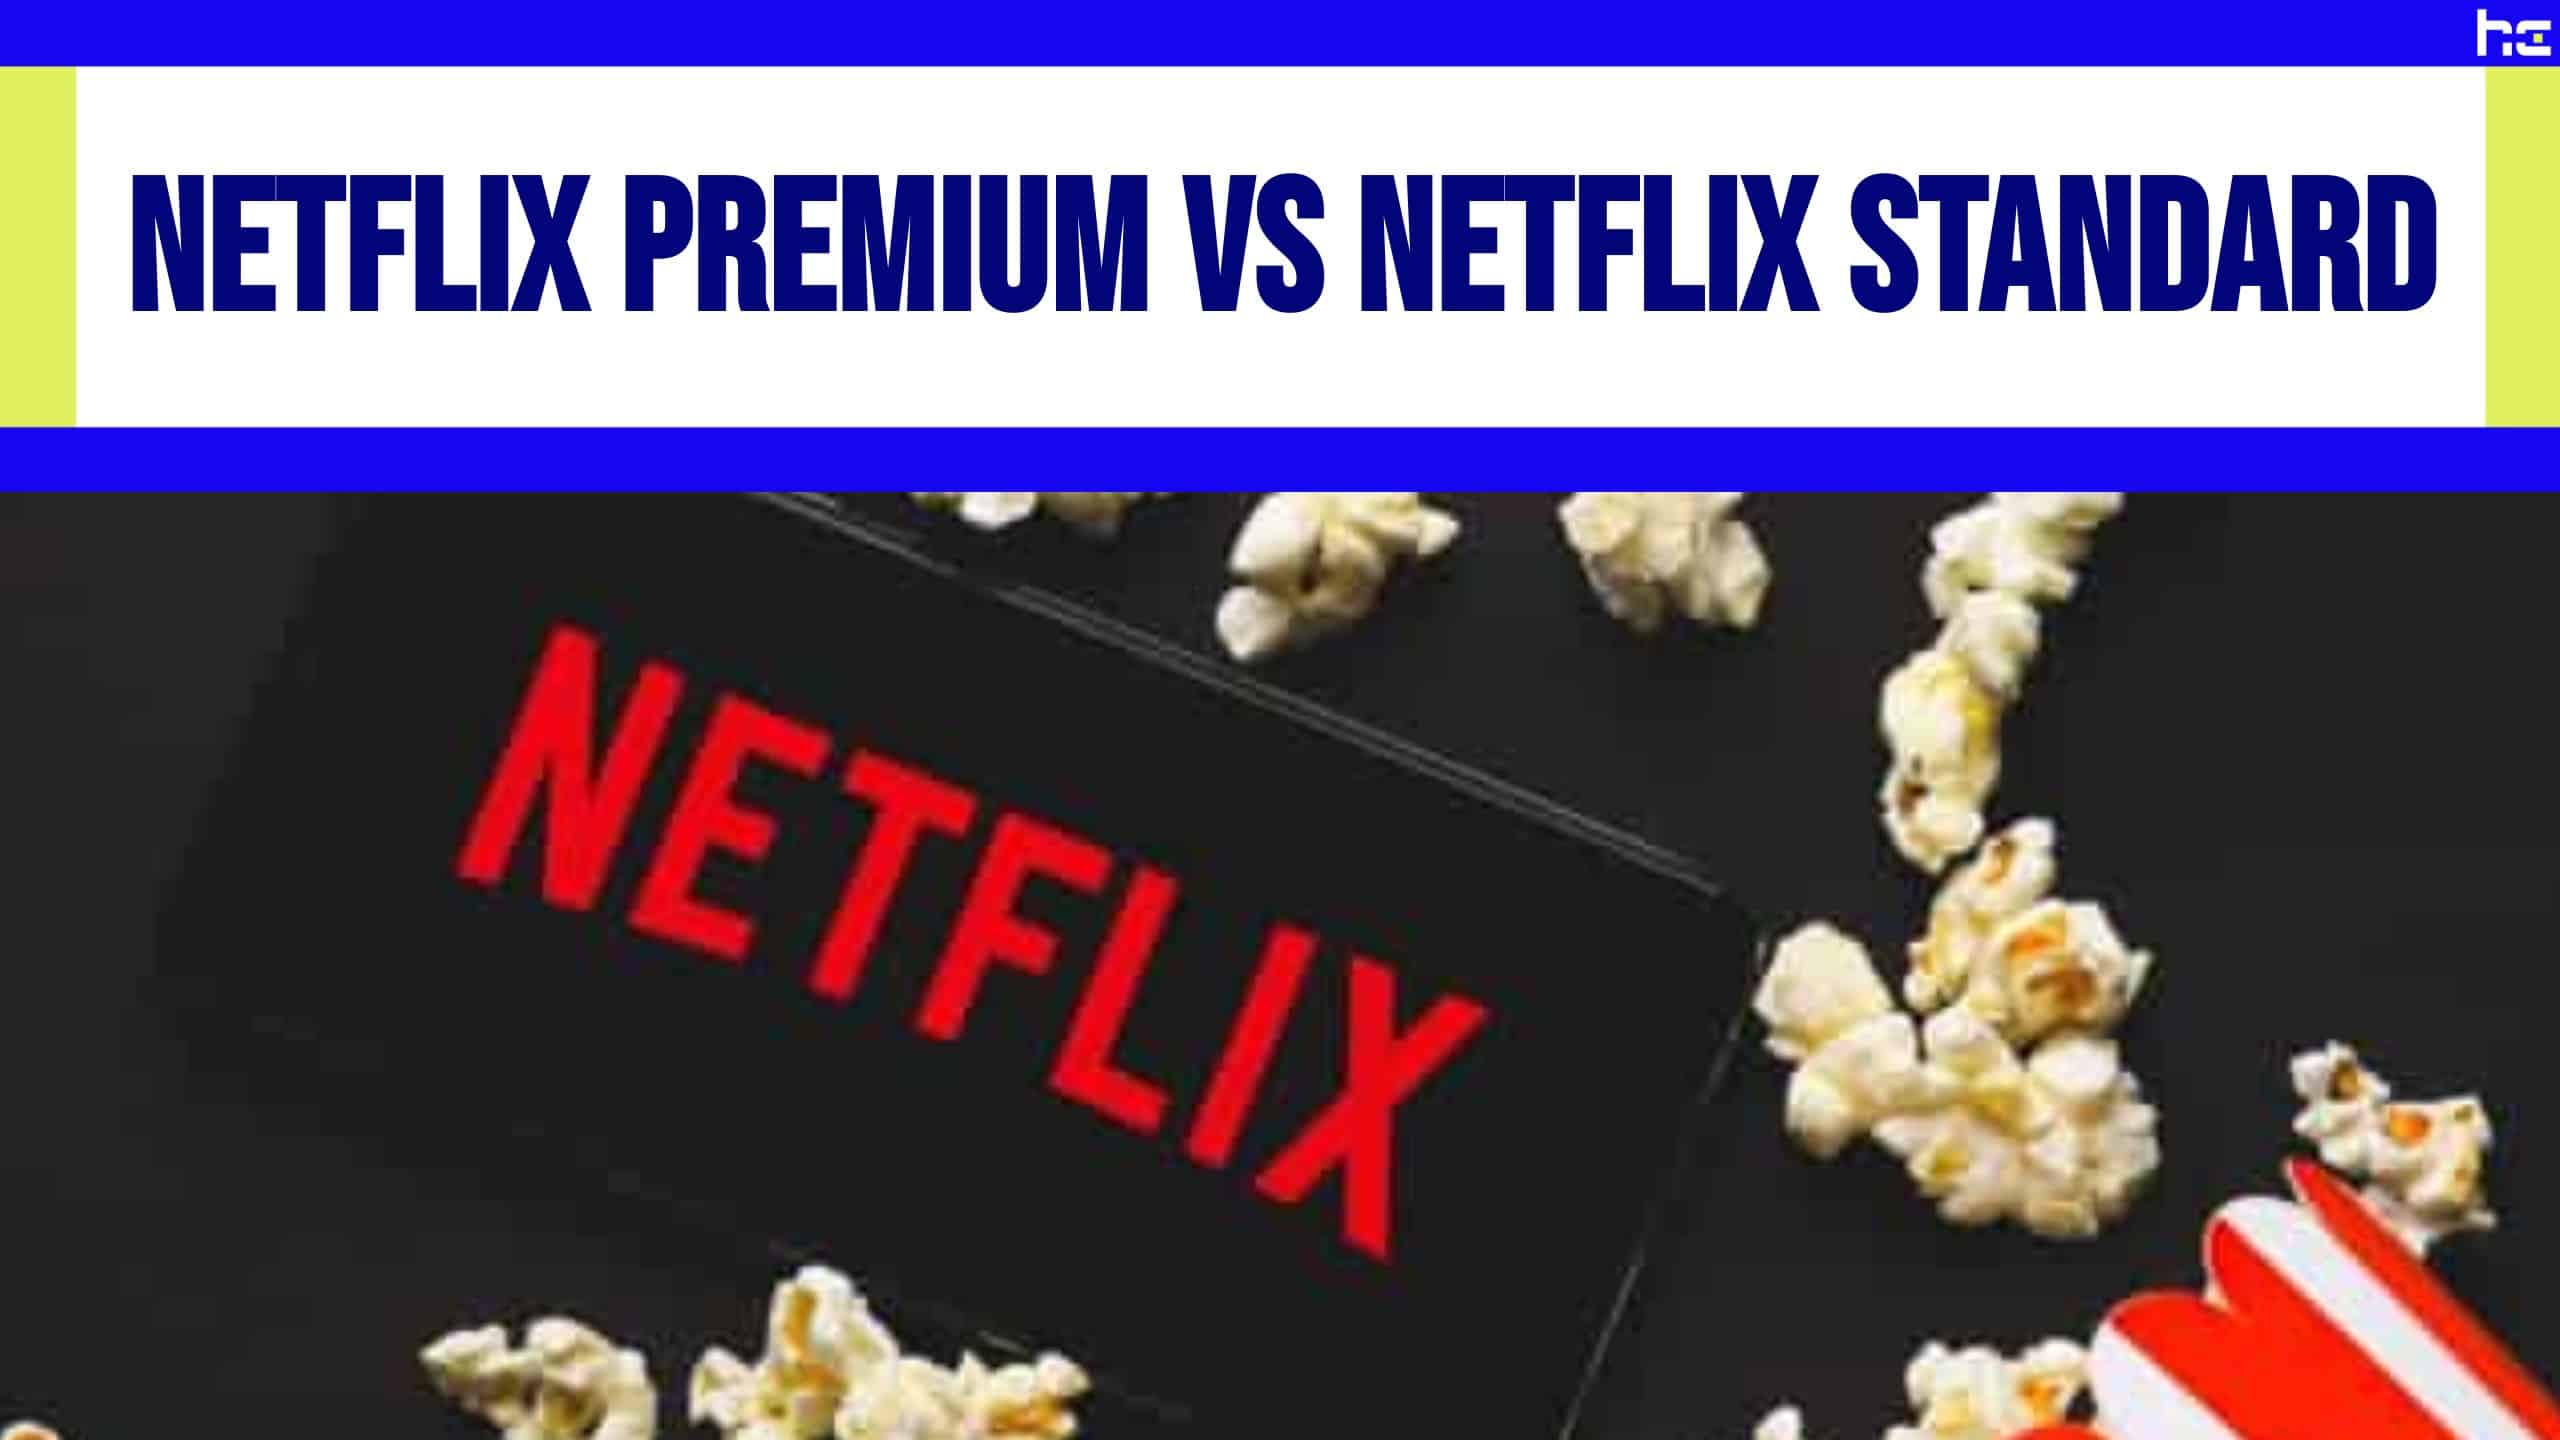 featured image for Netflix Premium vs Netflix Standard infographic